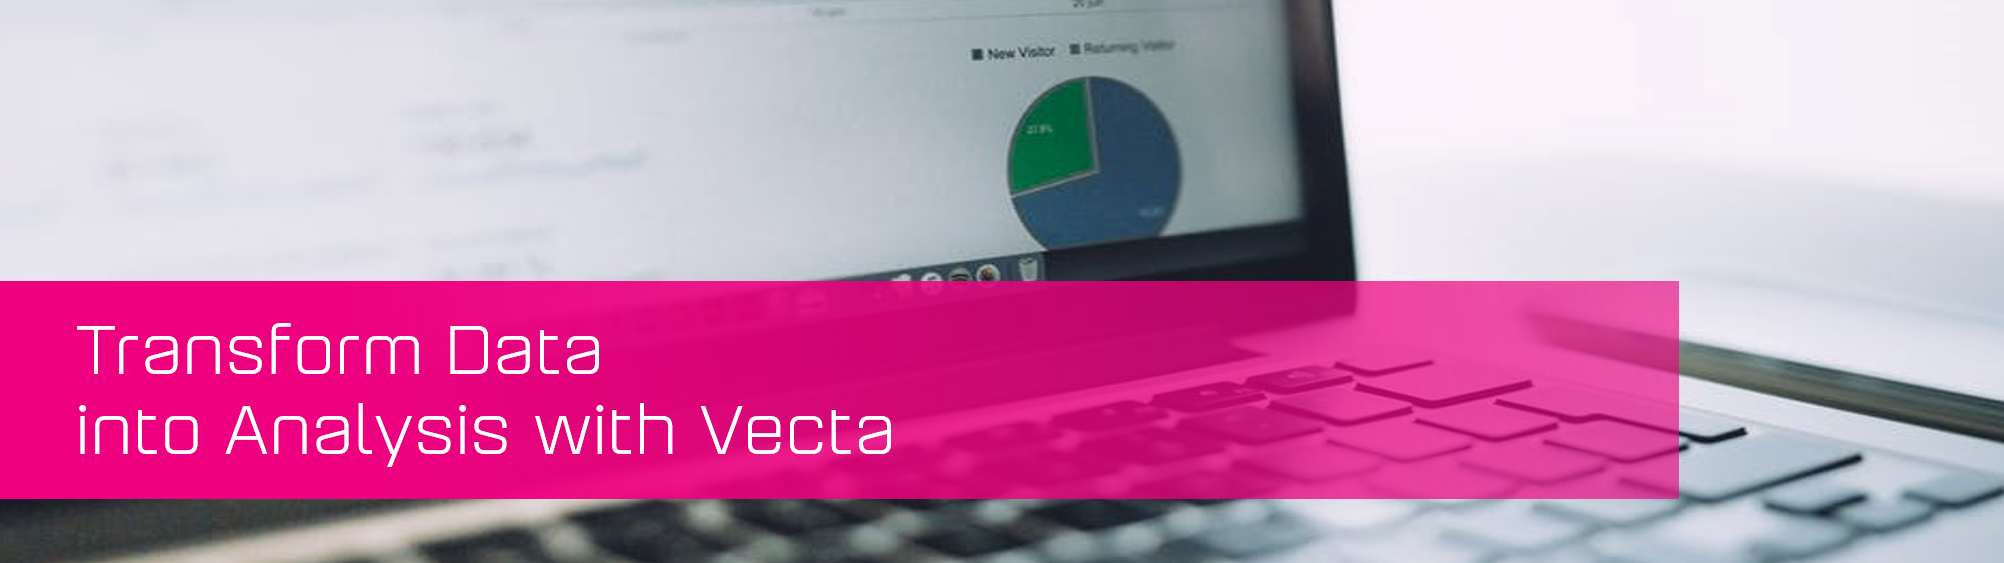 KCS SA - Blog - Transform with Vecta banner